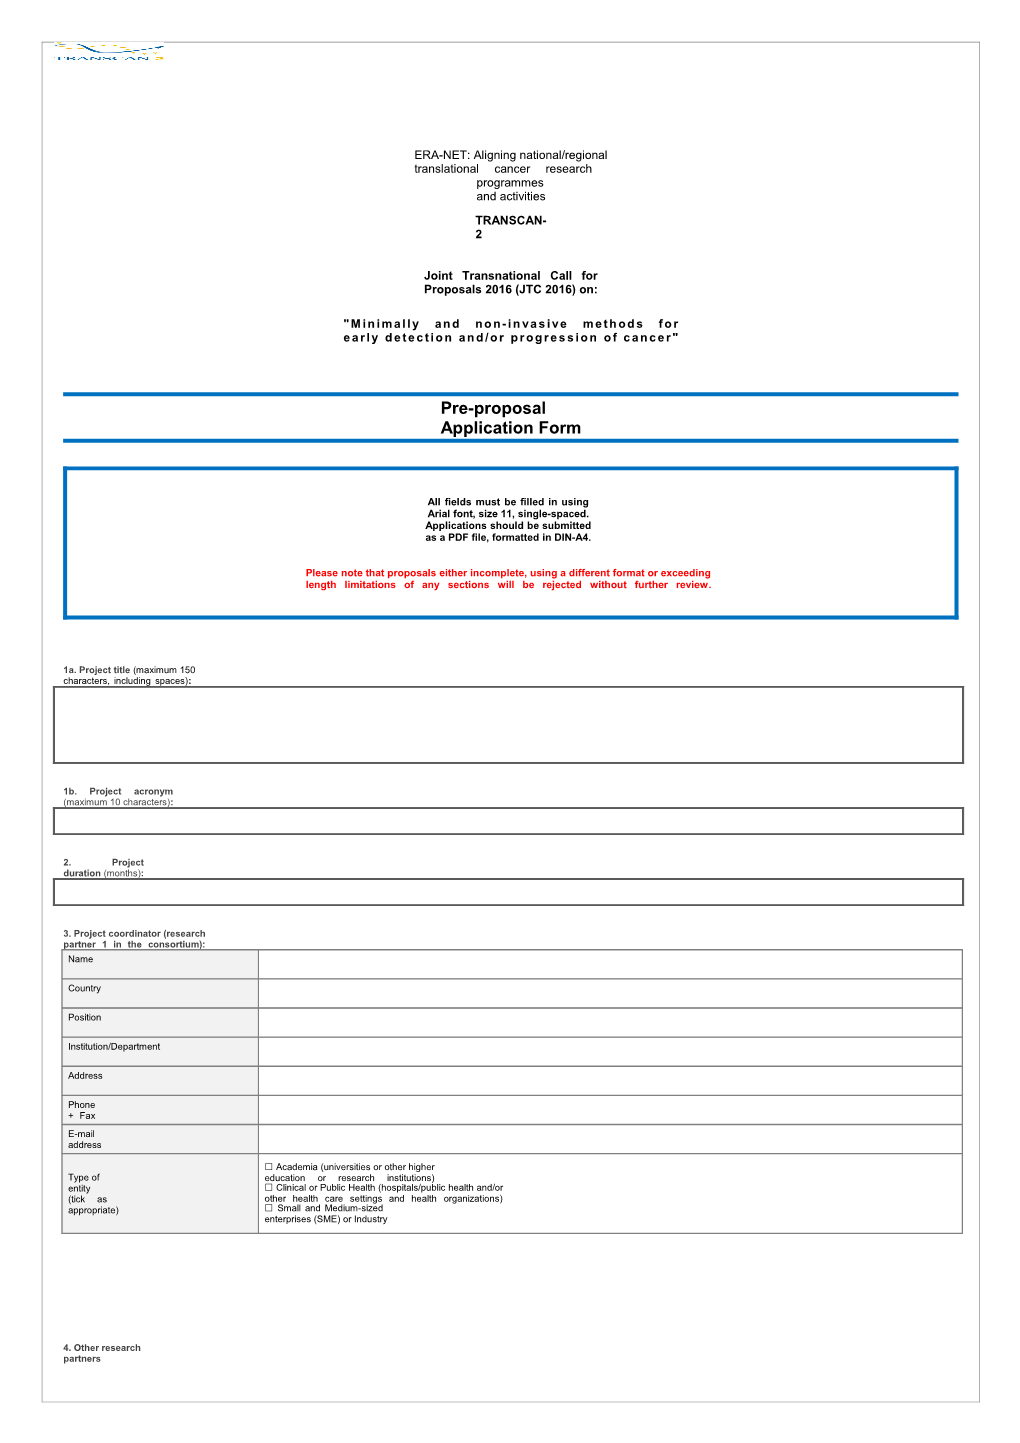 TRANSCAN JTC 2014 Pre-Proposal Application Form